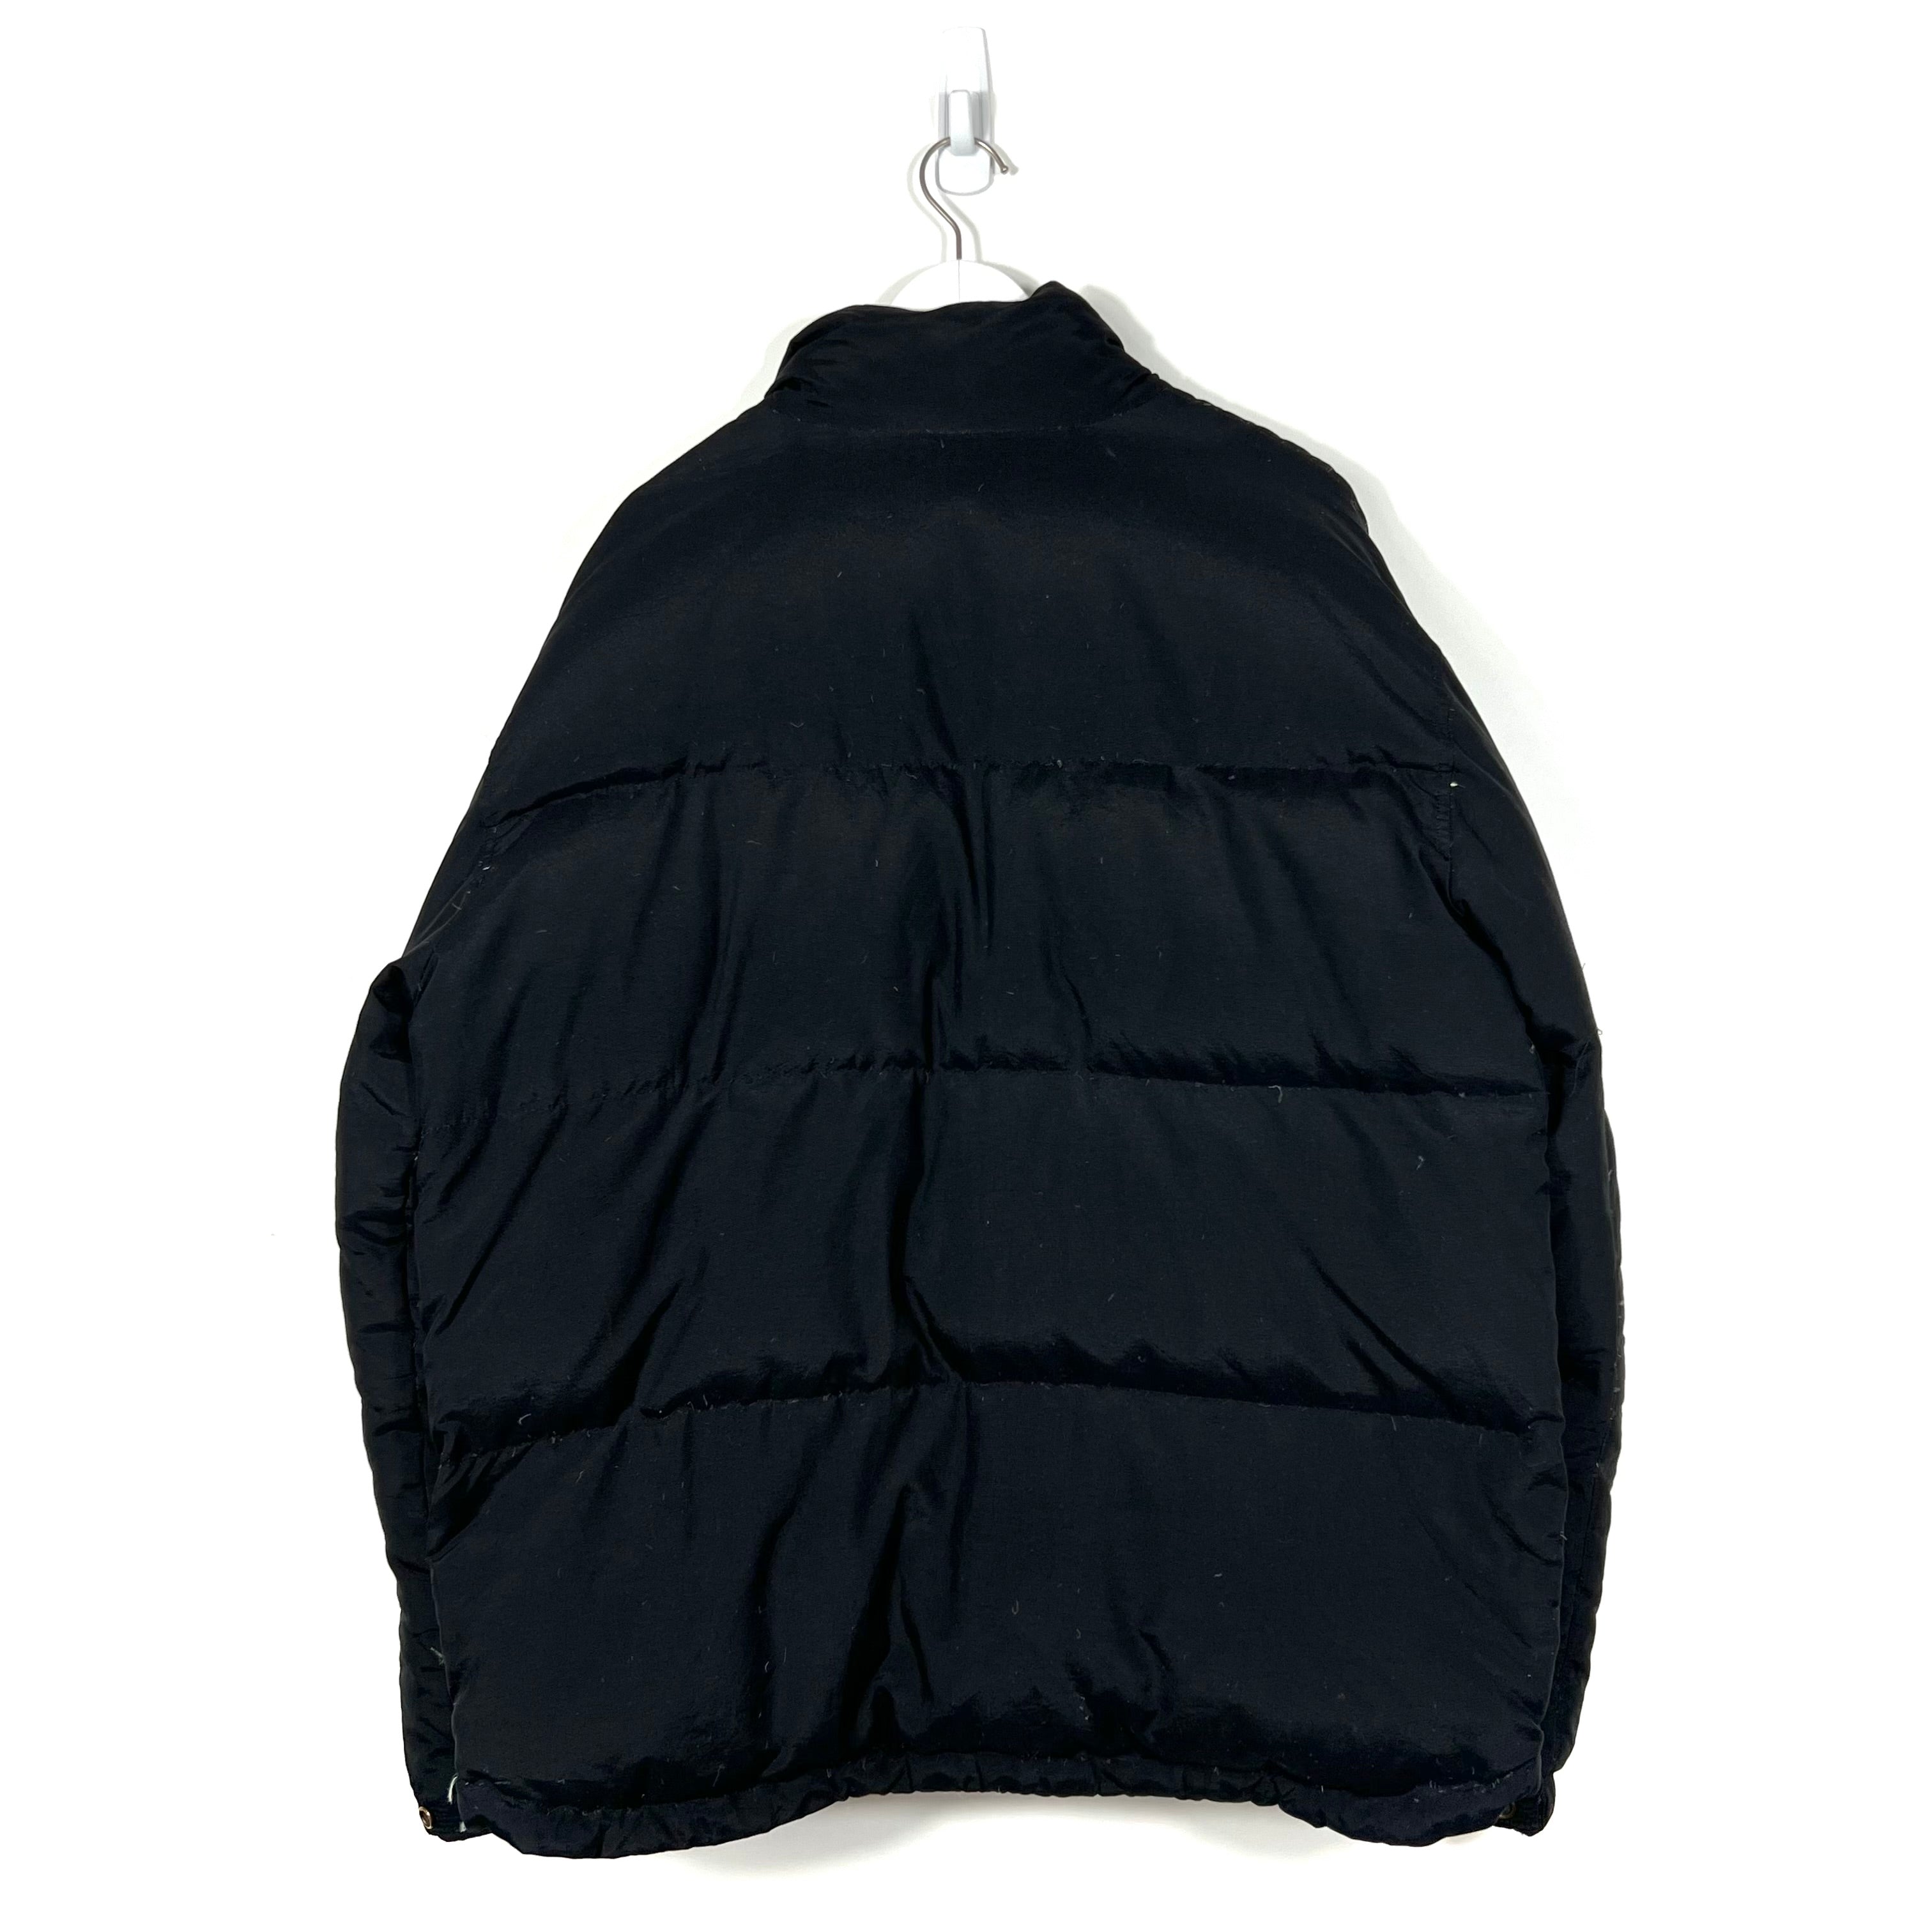 Tommy Hilfiger Cold Stop Reversible Puffer Jacket - Men's Large